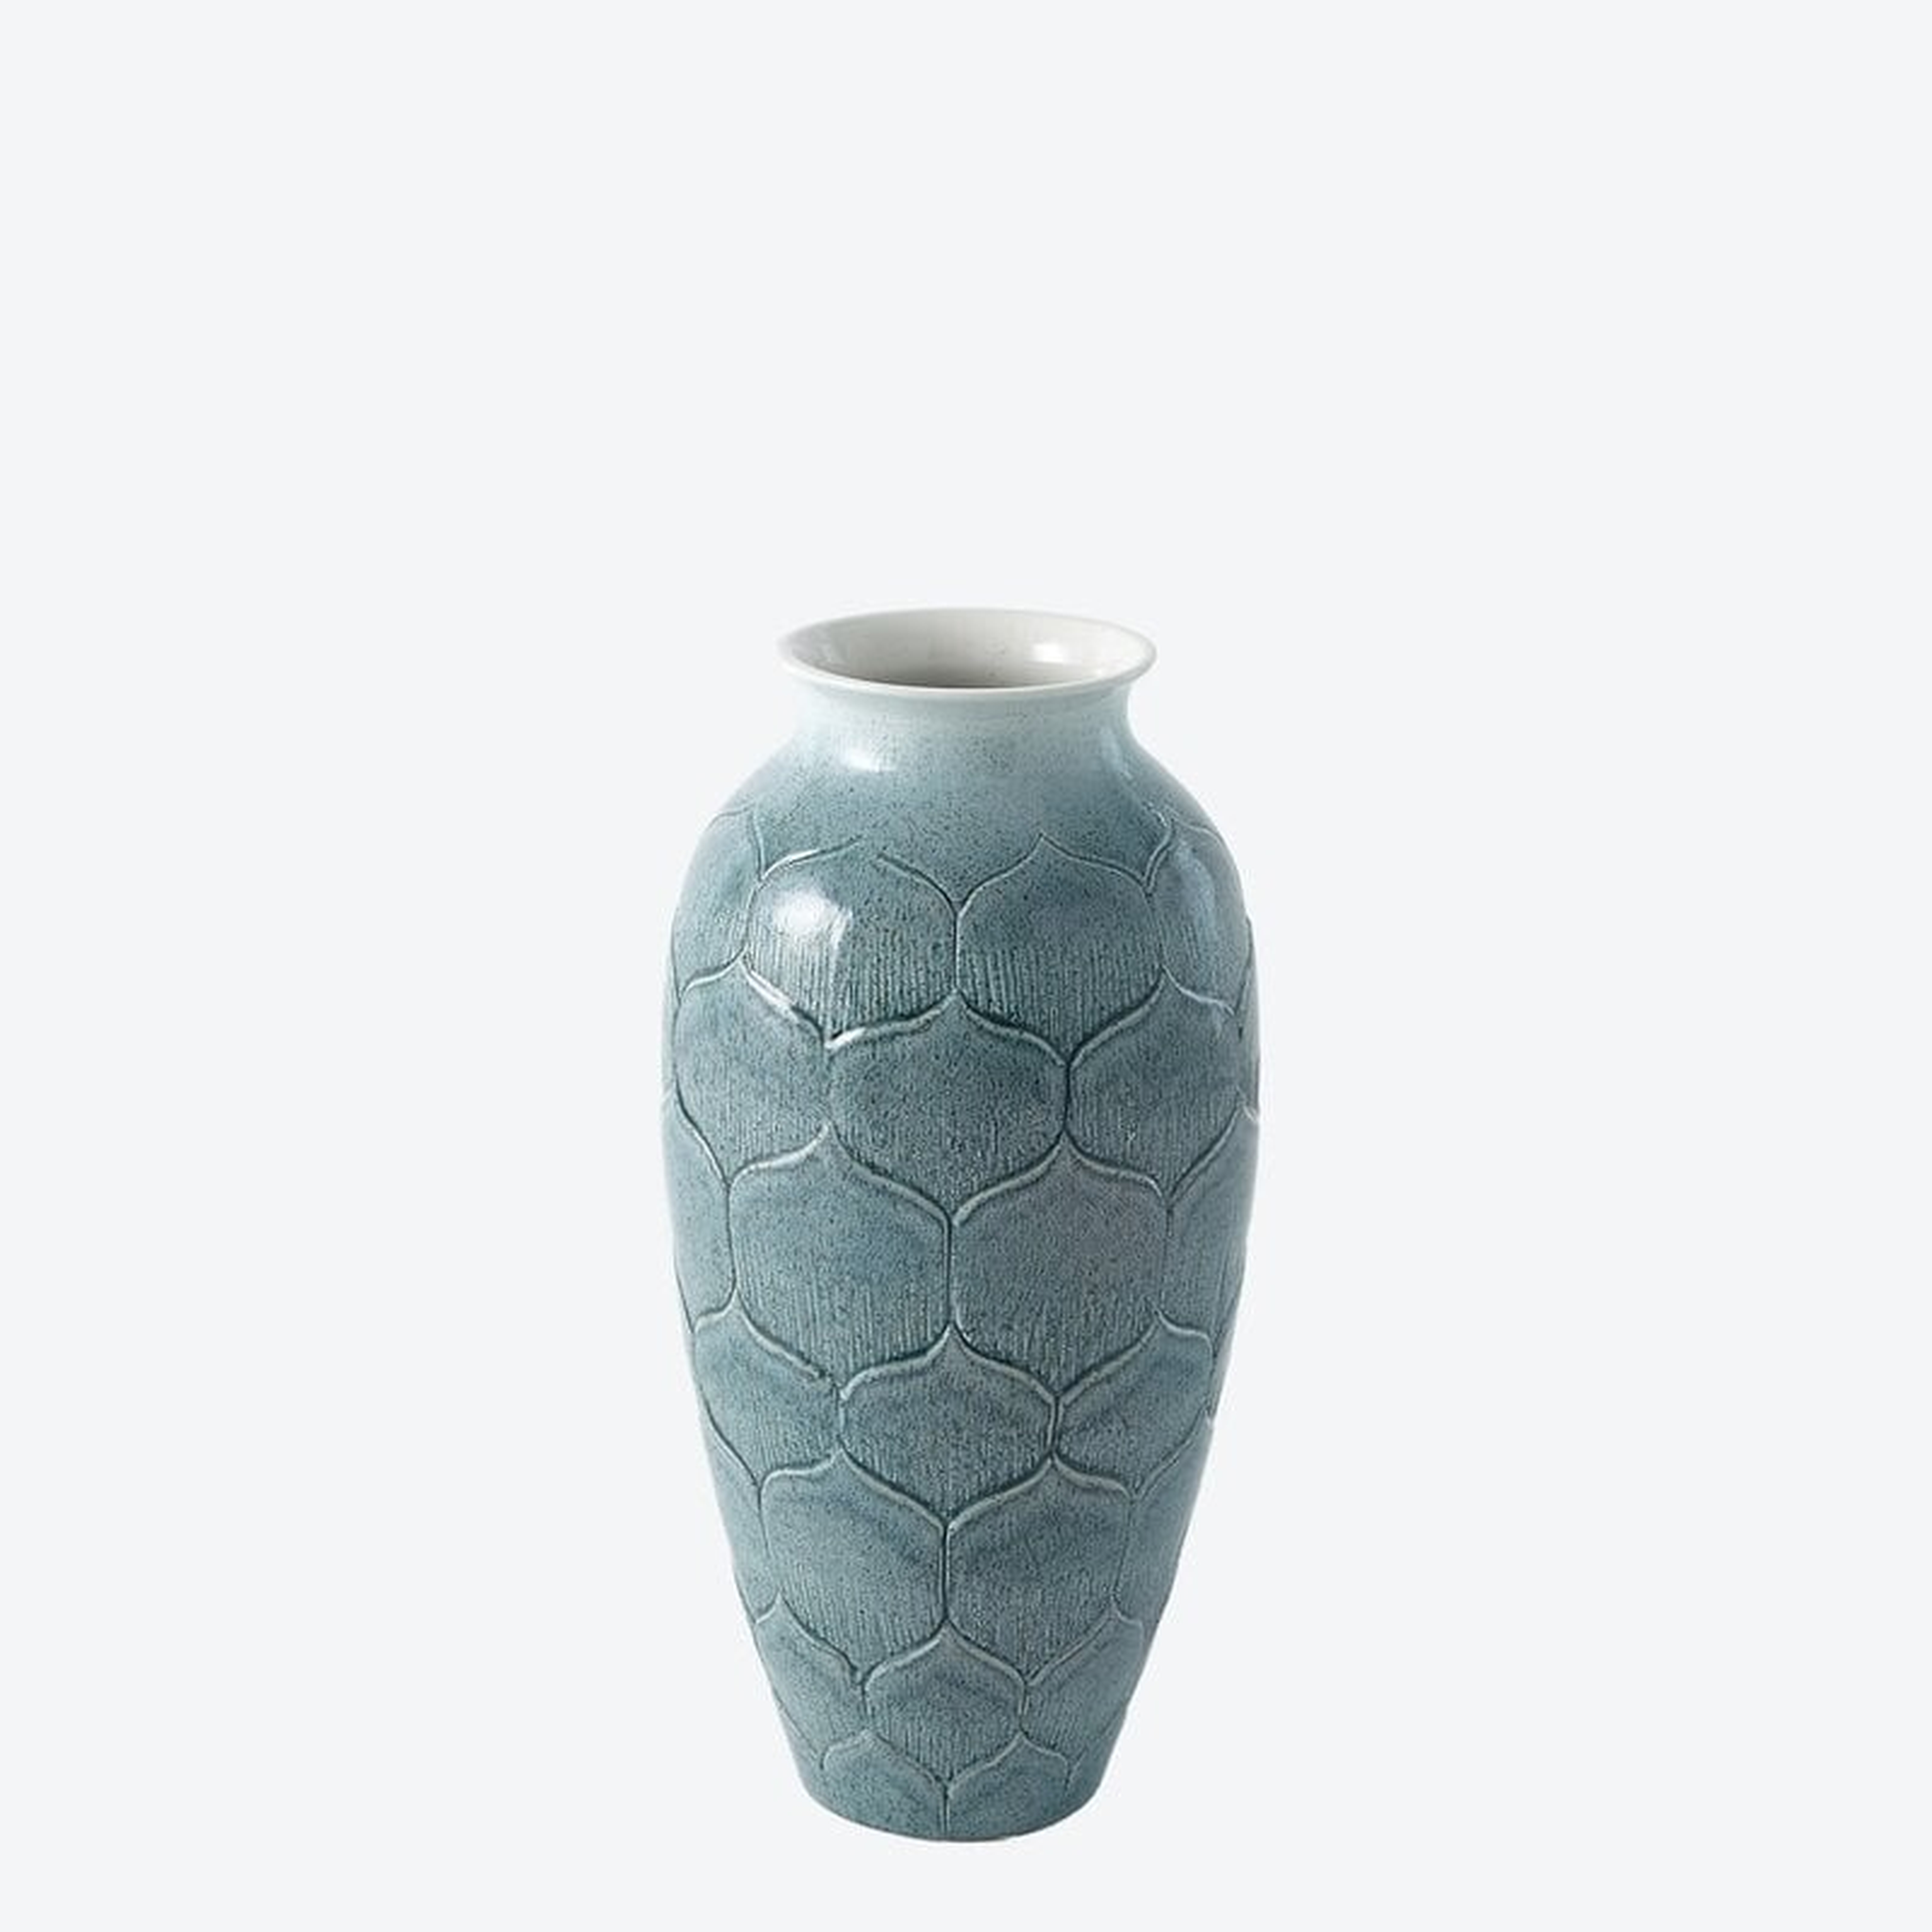 Lady Lo's Teal Ceramic Table Vase - Perigold